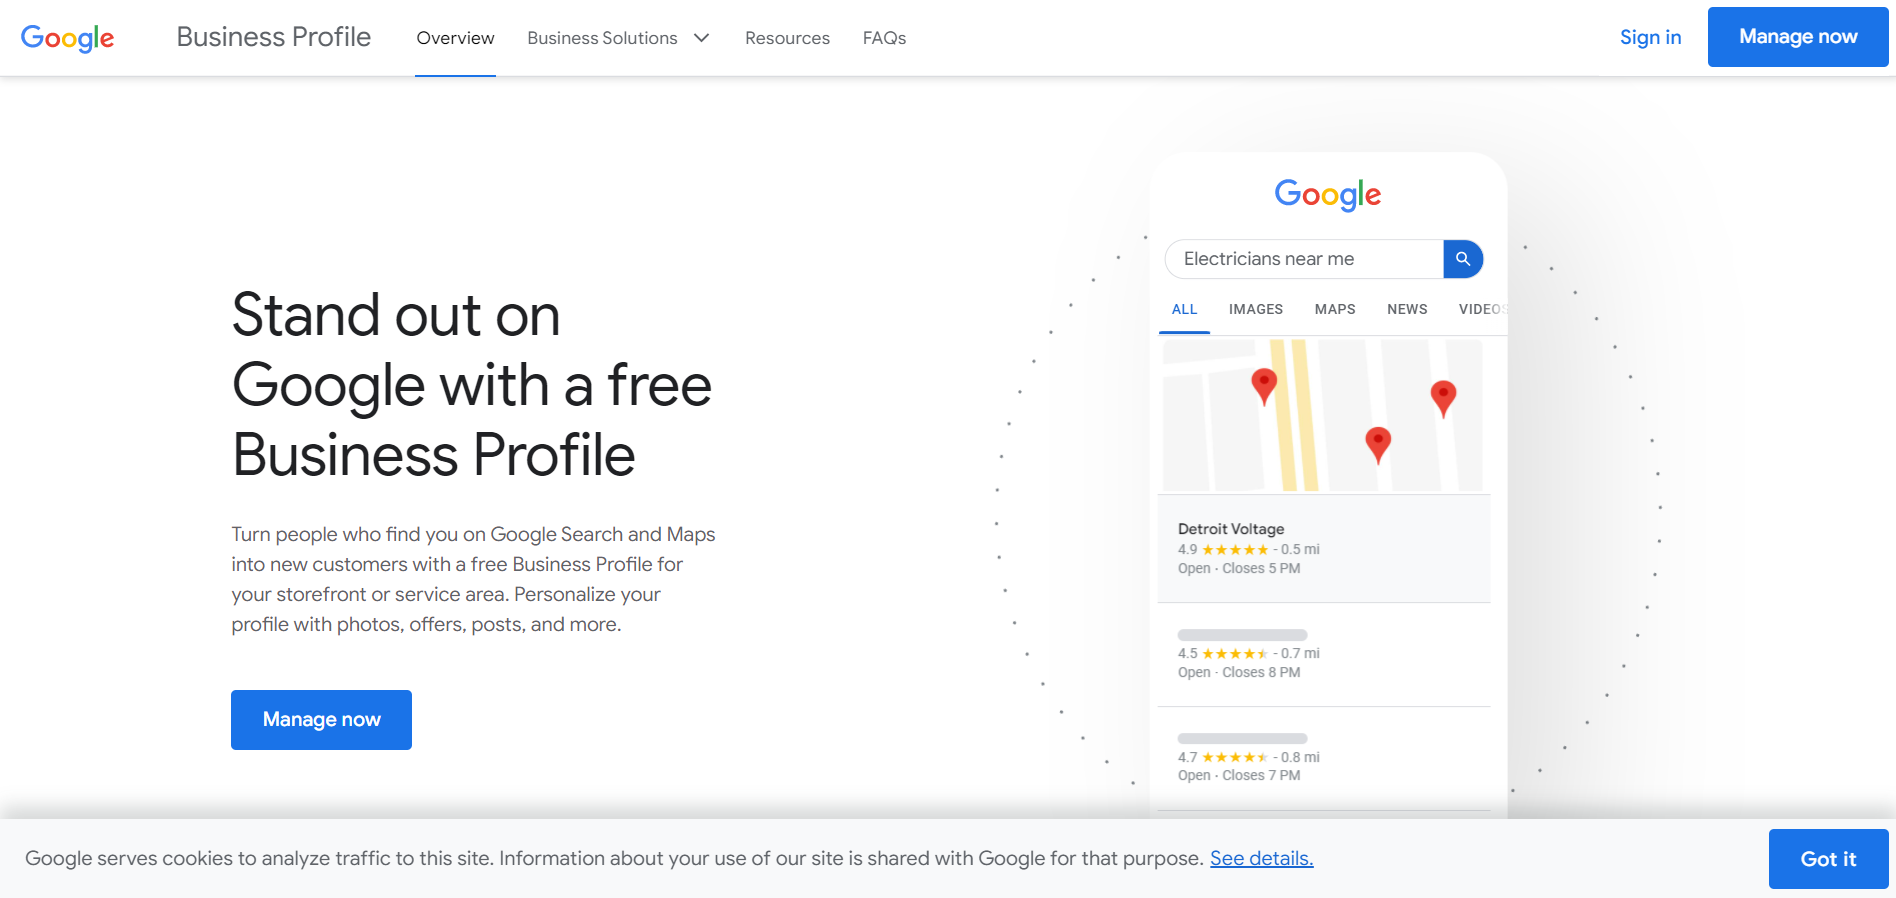 Log into Google Business Profile